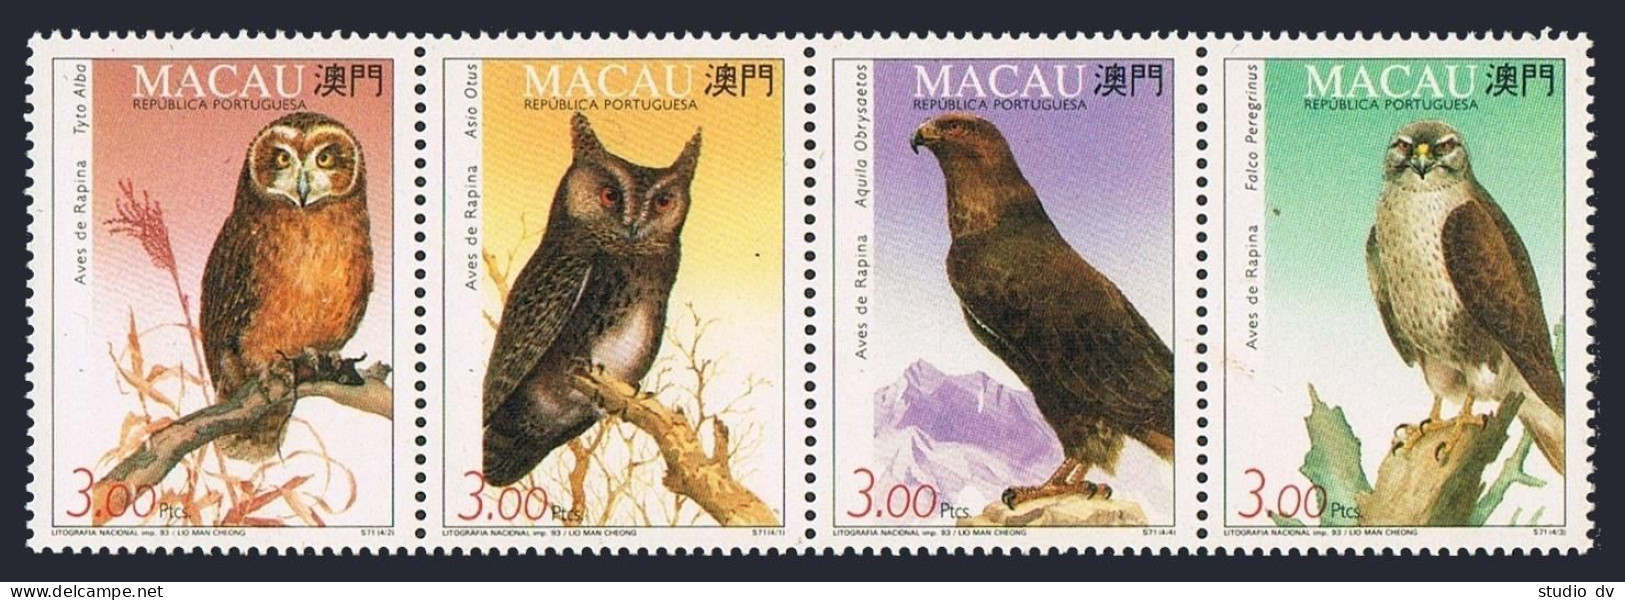 Macao 699-702a Strip, MNH. Michel 727-730. Birds 1993. Falcon, Aquila, Owls. - Ungebraucht